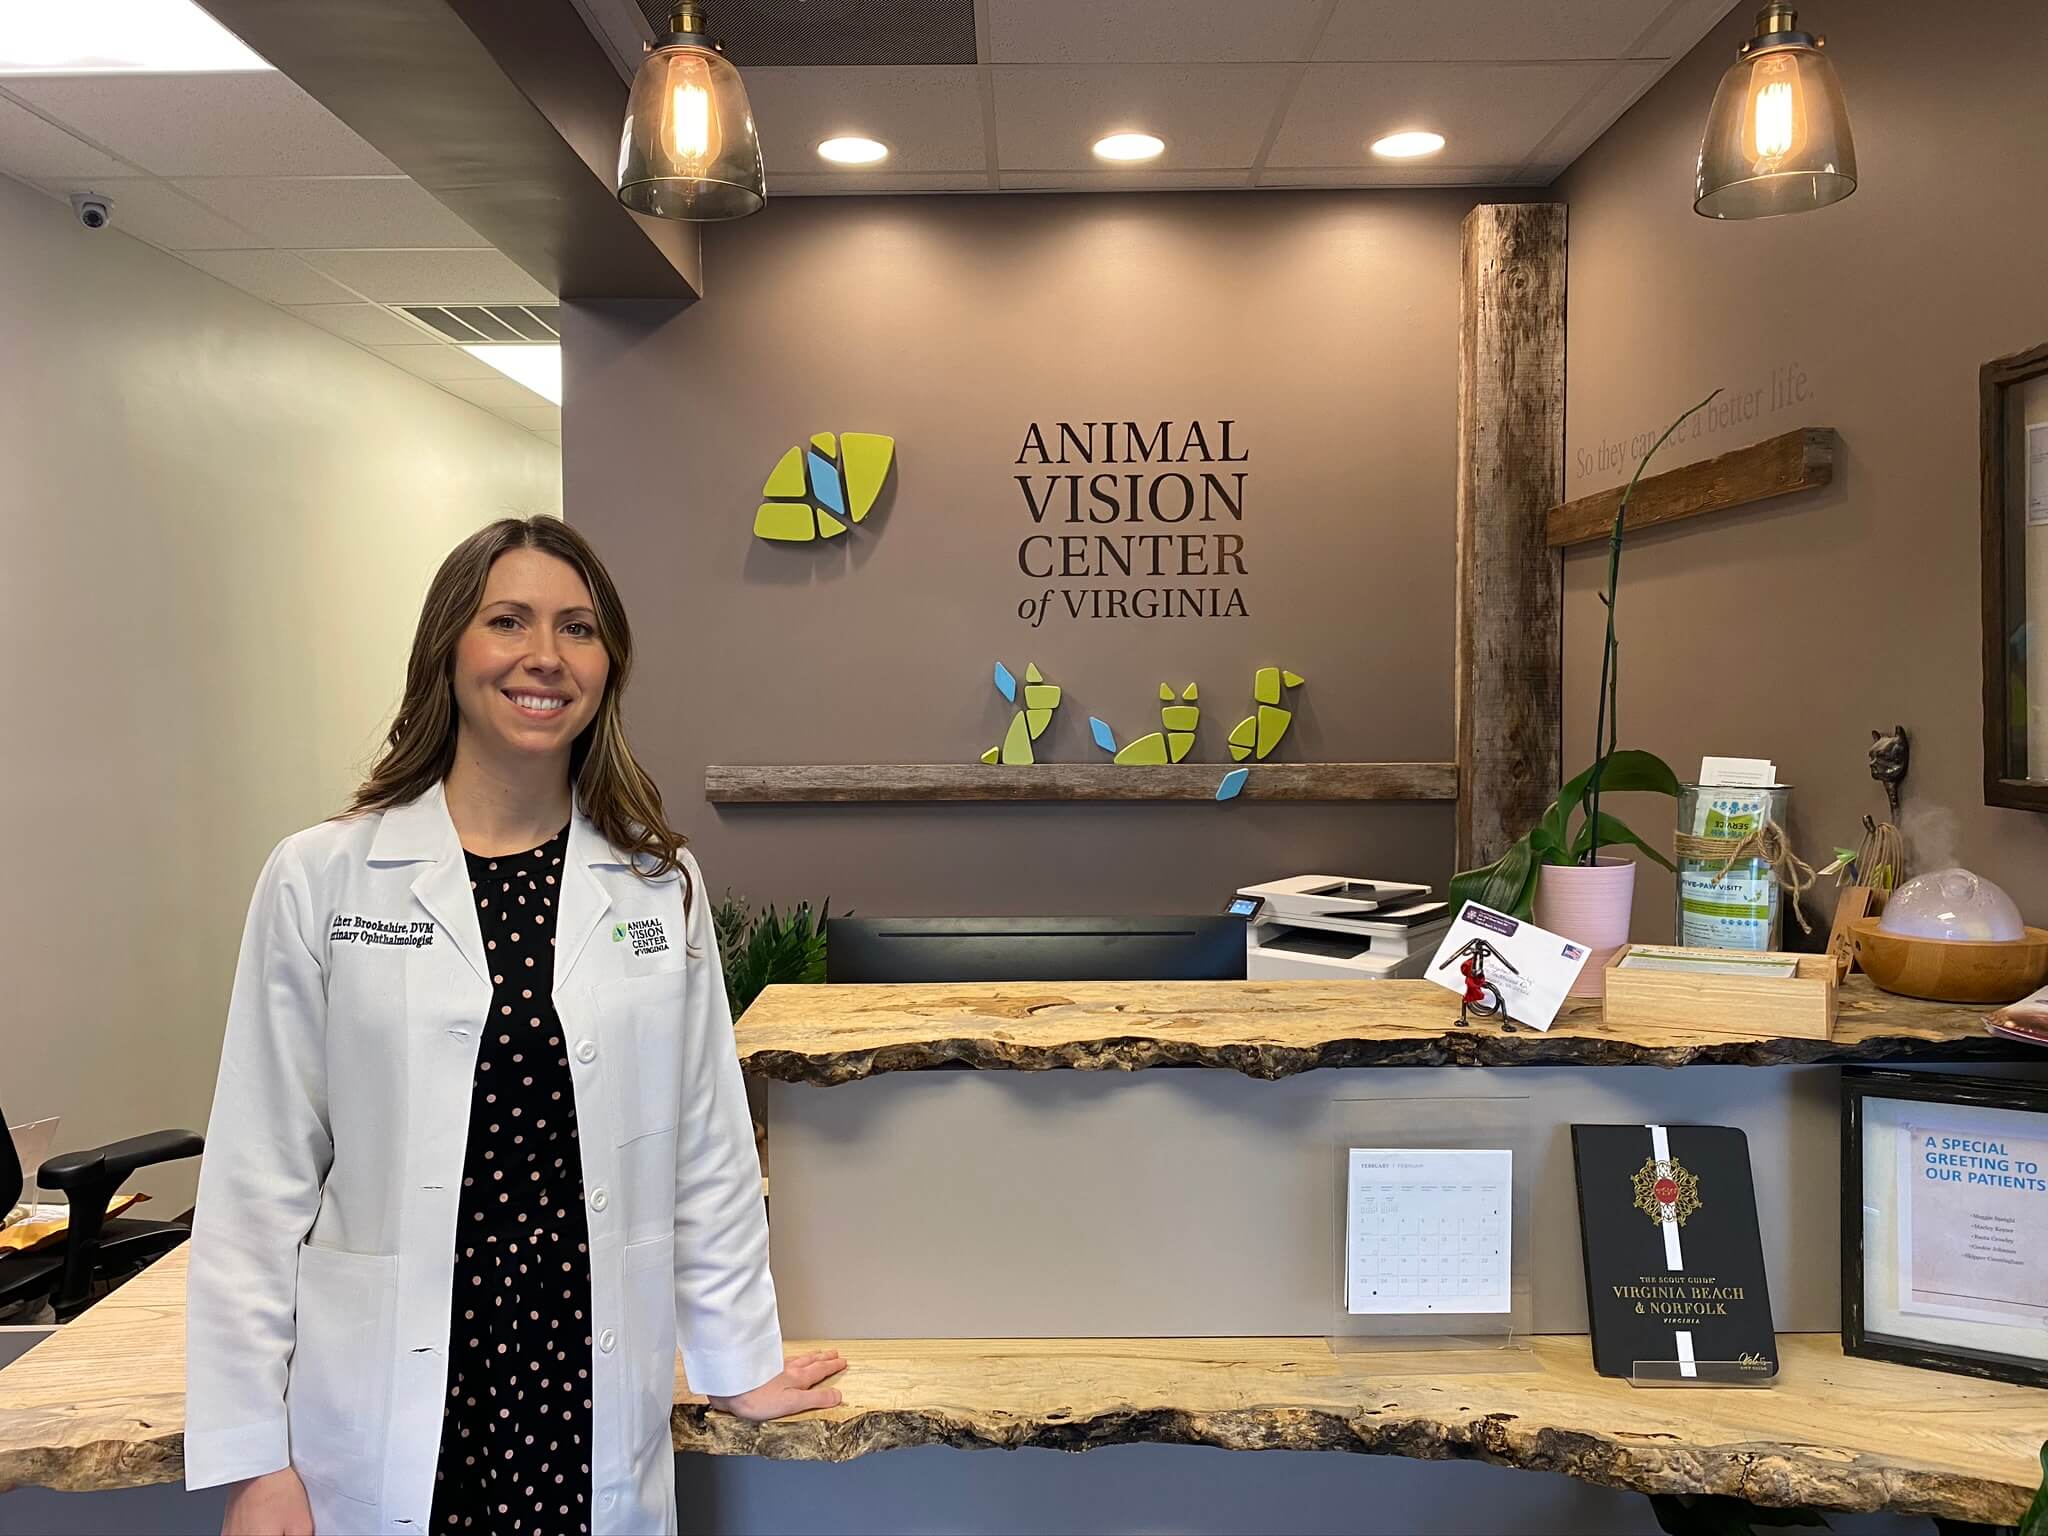 Animal Vision Center of Virginia